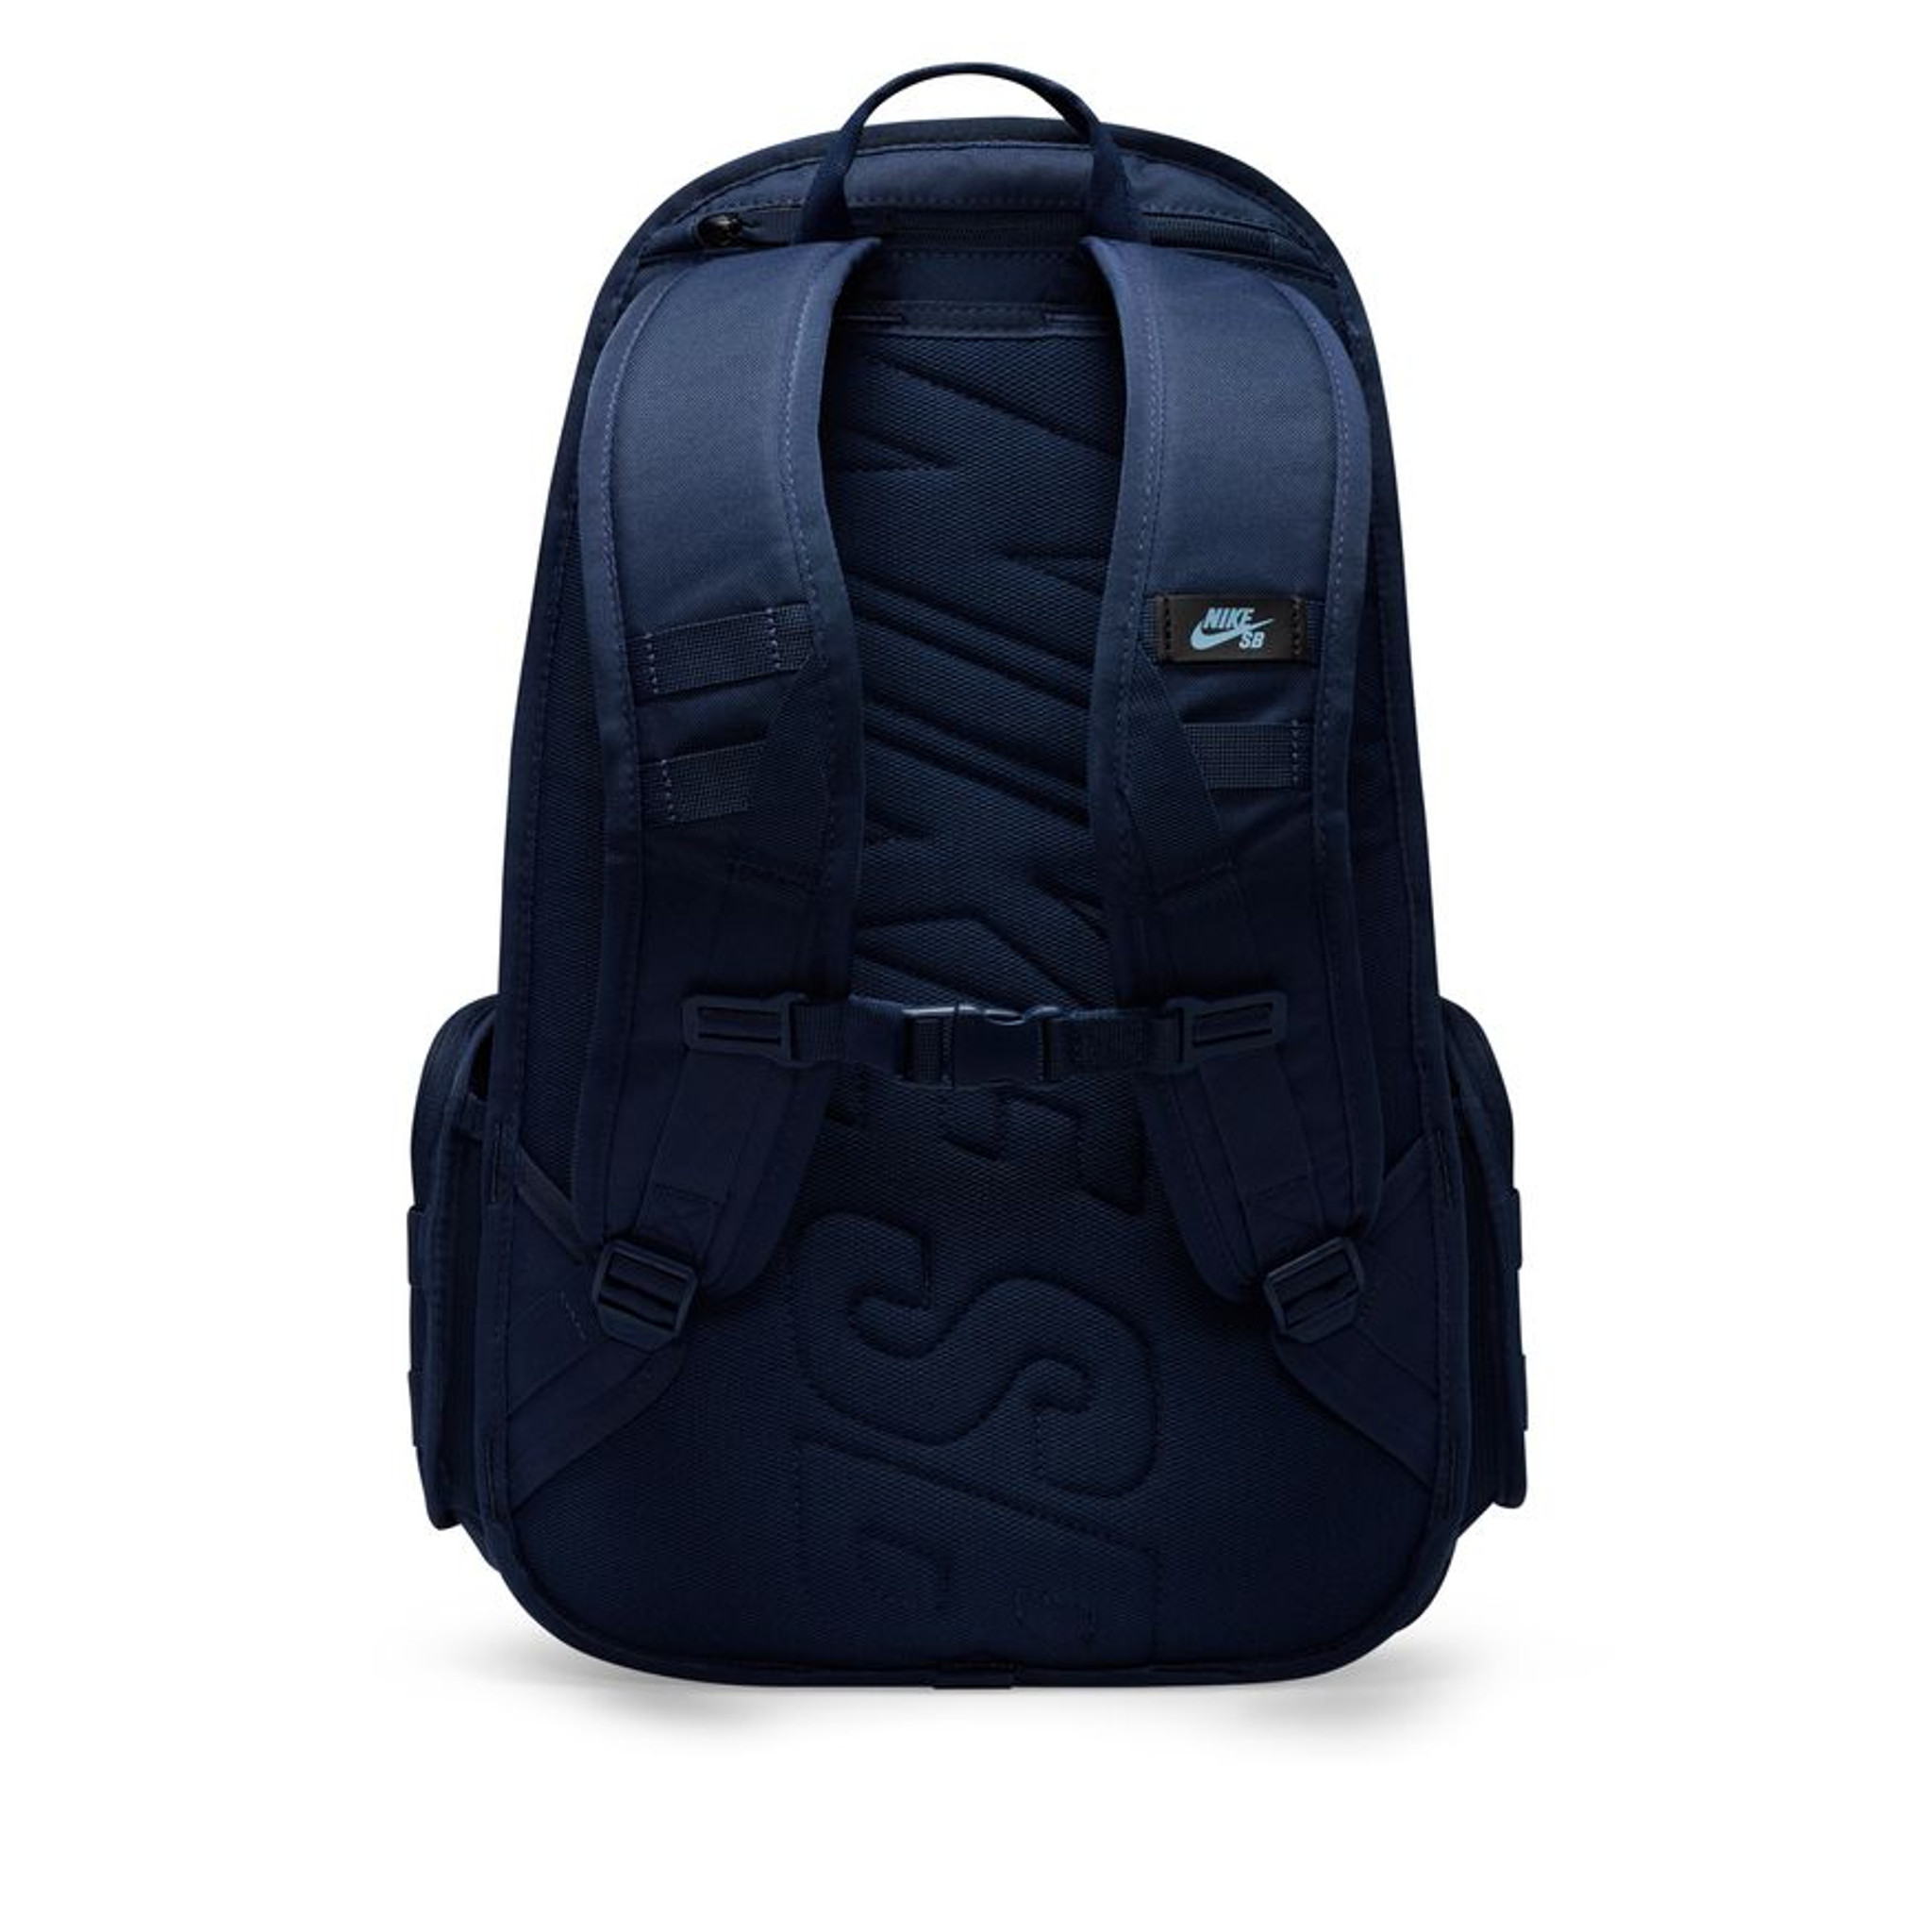 Blue children's backpack student bag Nike genuine mini travel bag college  student backpack casual sports bag